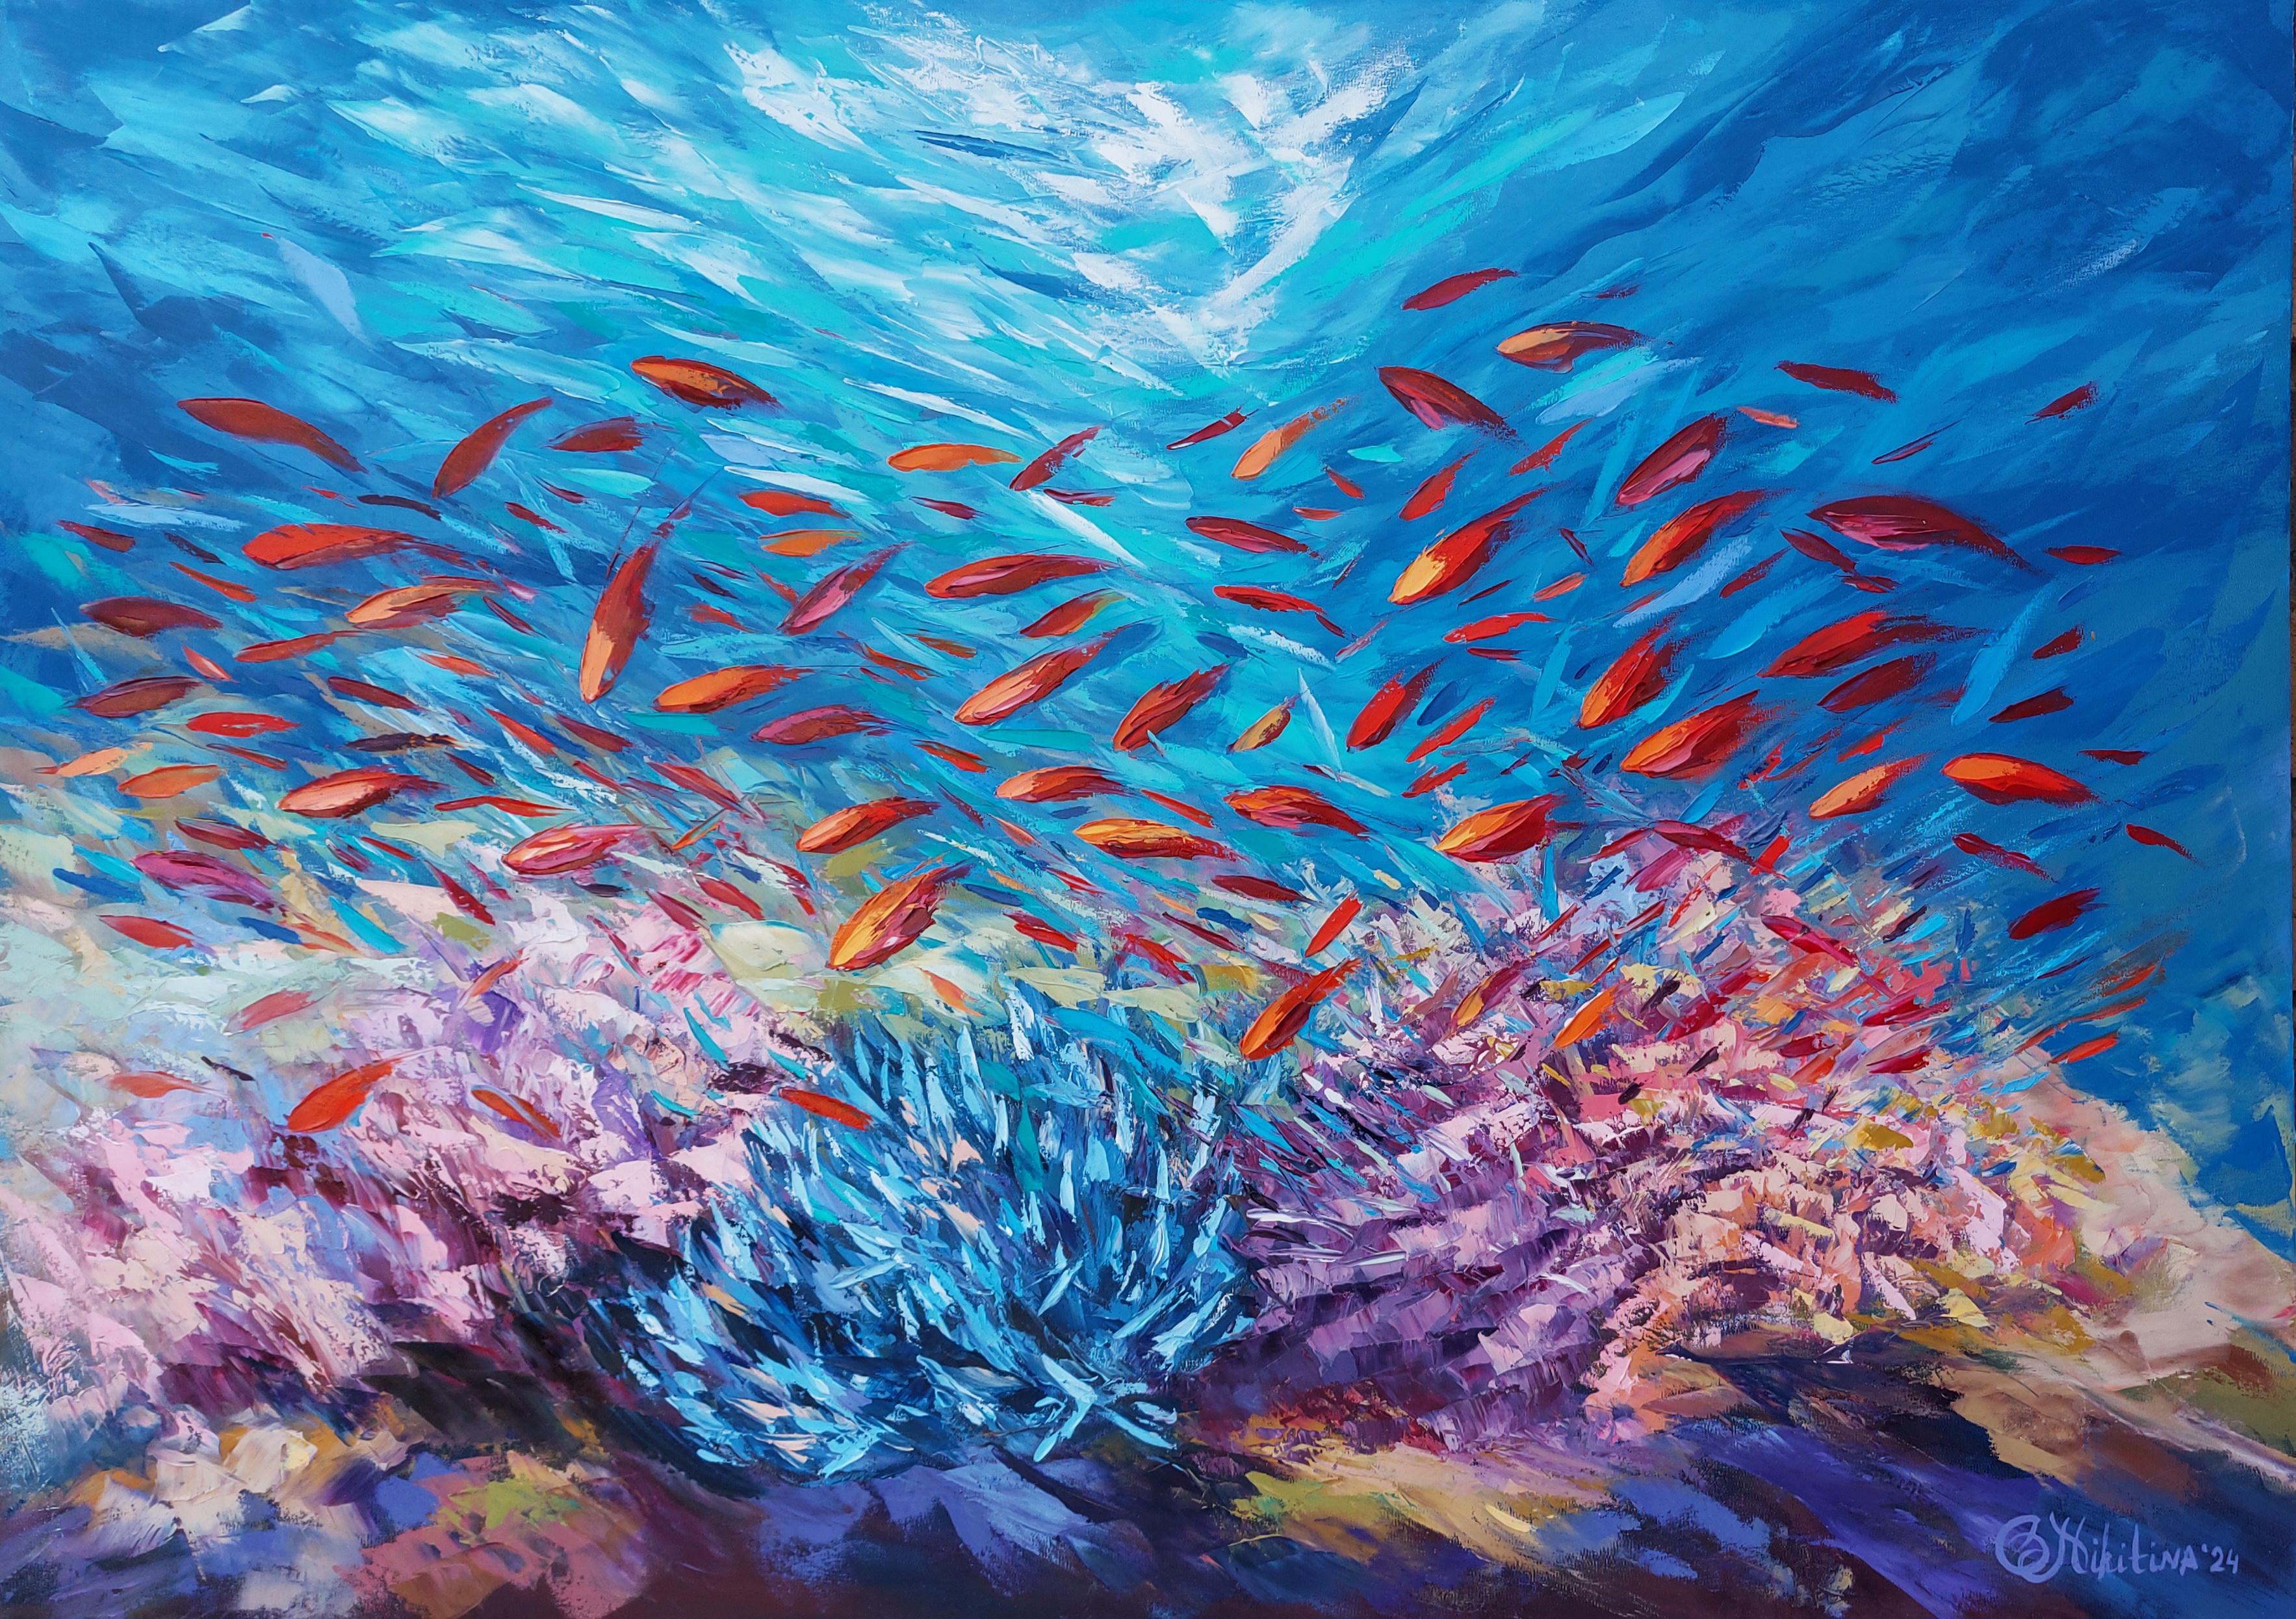 Olga Nikitina Animal Painting - Coral Reef Painting Ocean Art Underwater Seascape Original Painting